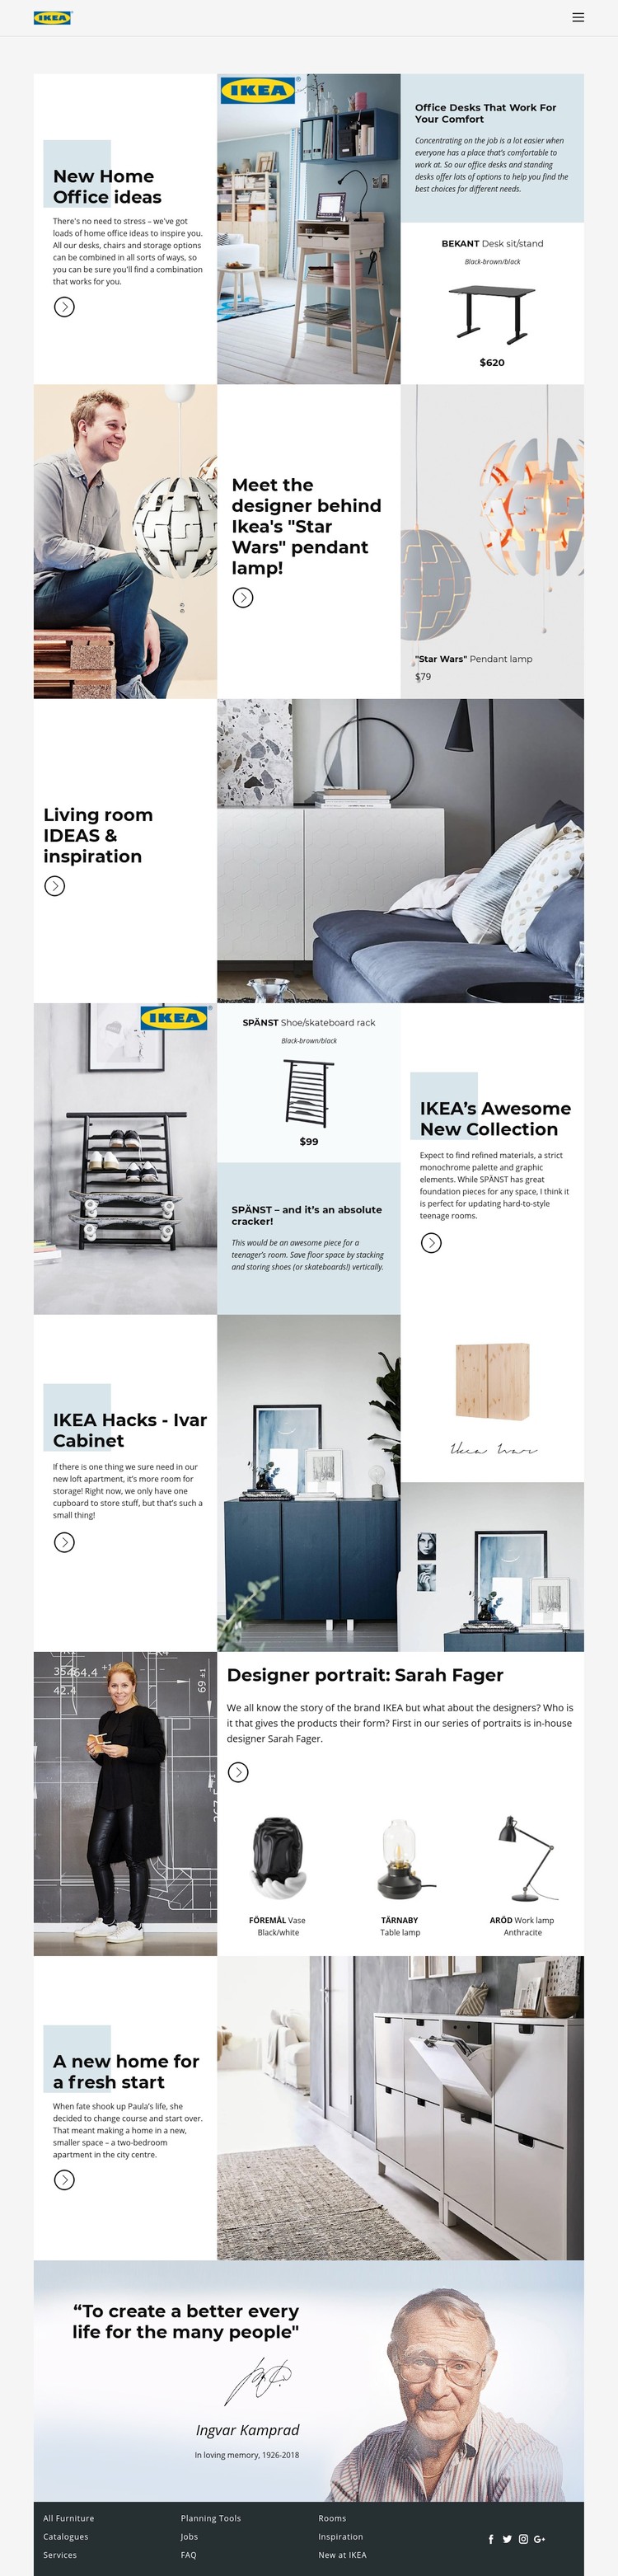 Inspiration from IKEA Webflow Template Alternative